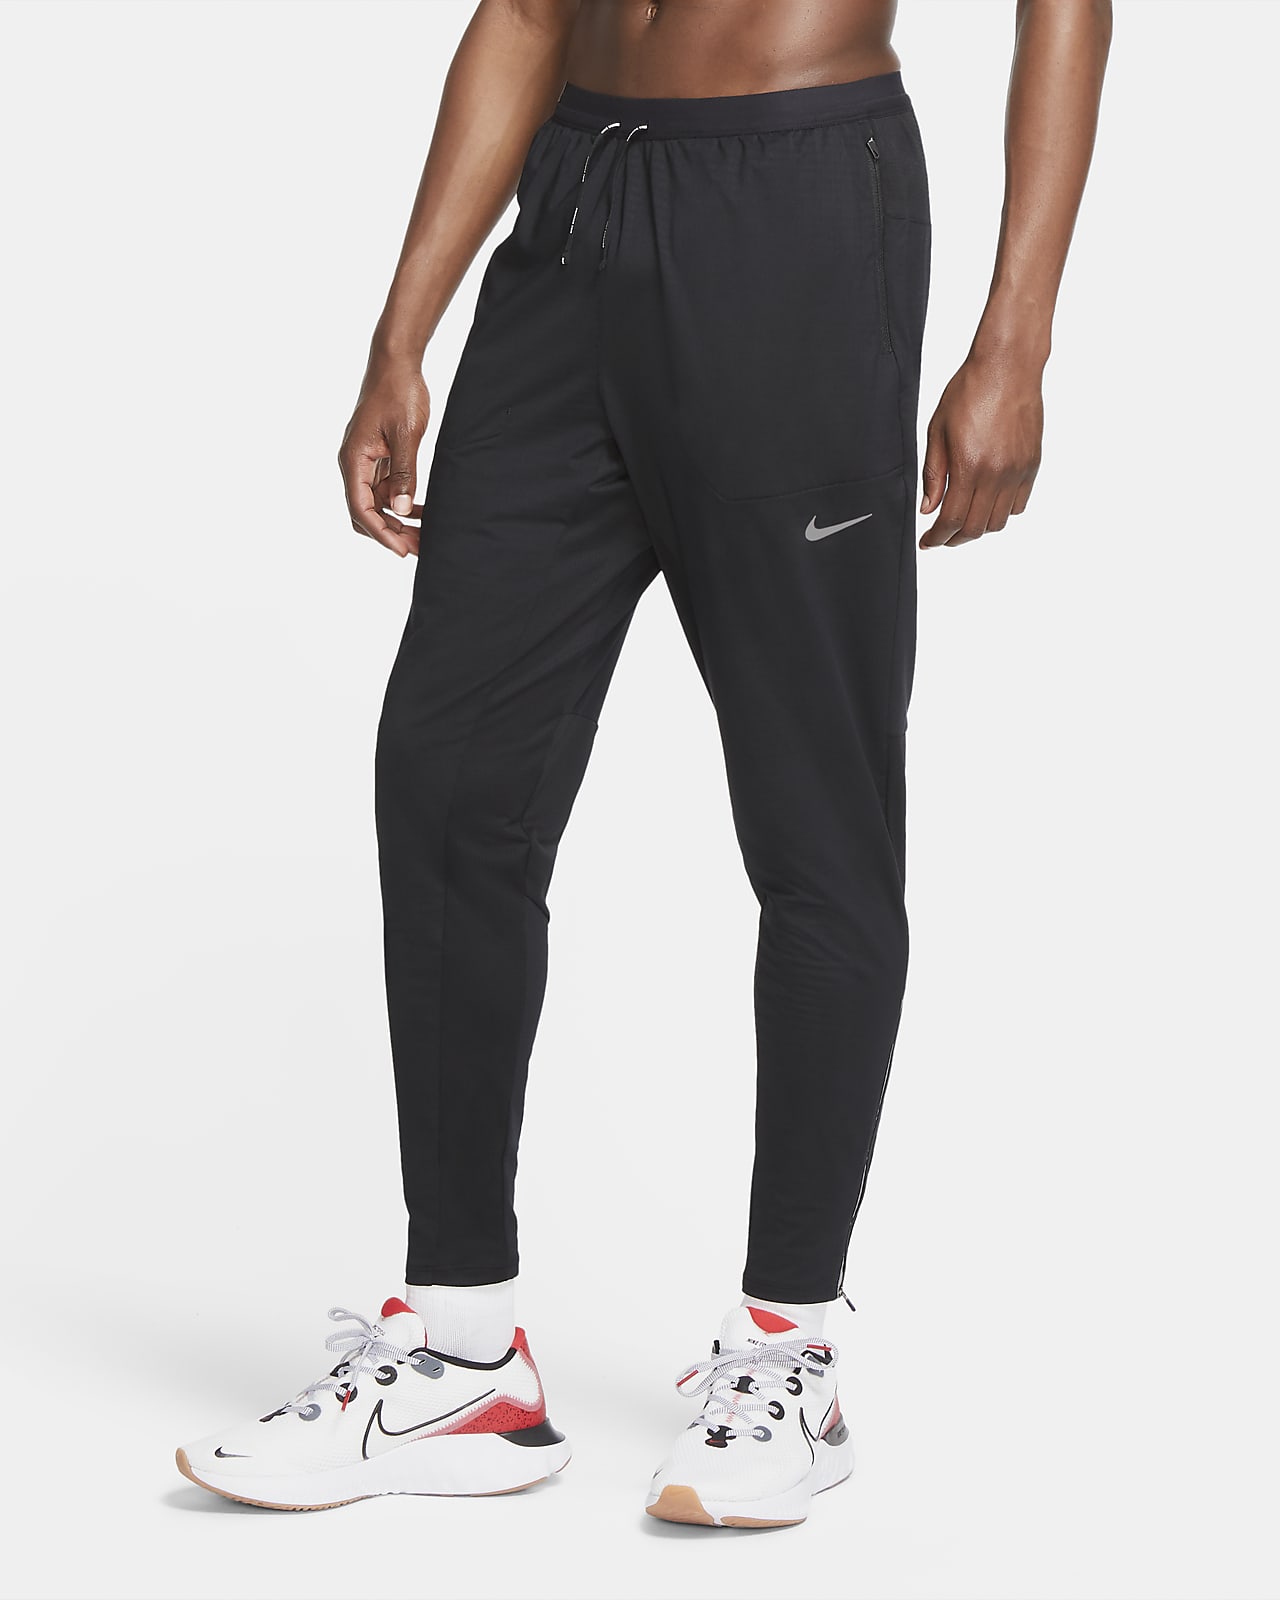 Nike Phenom Elite Knit hardloopbroek voor heren